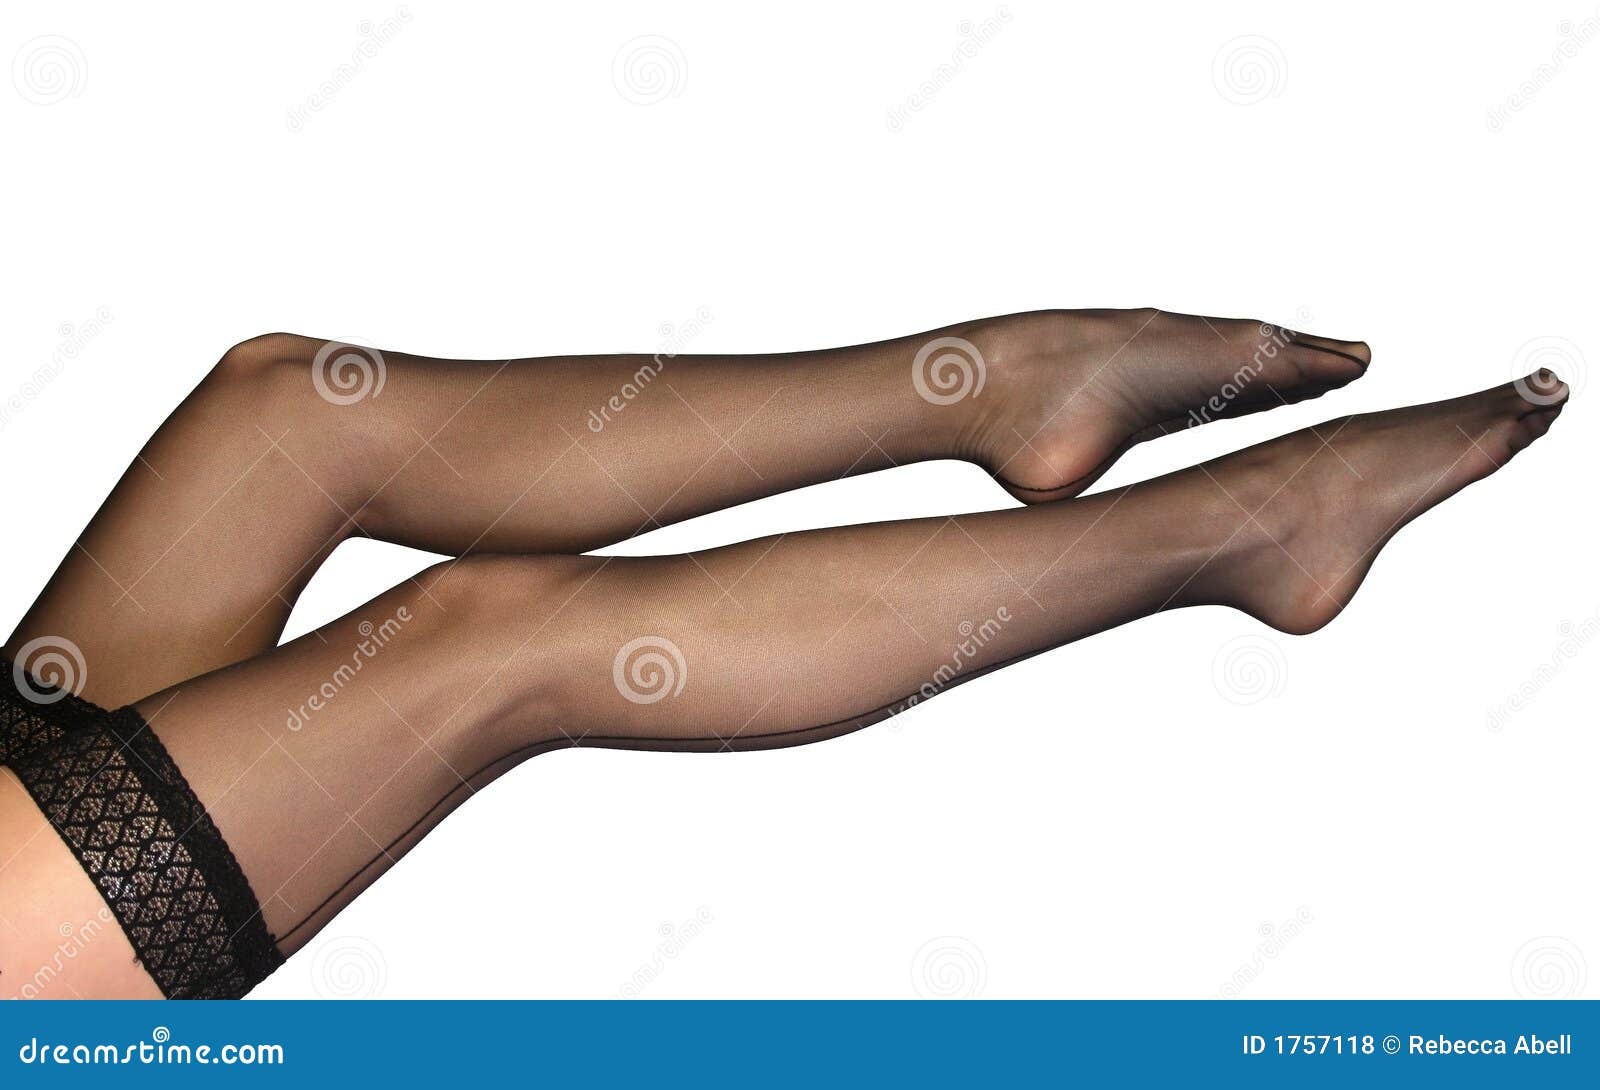 arpie padora recommends Leg In Nylon Stocking